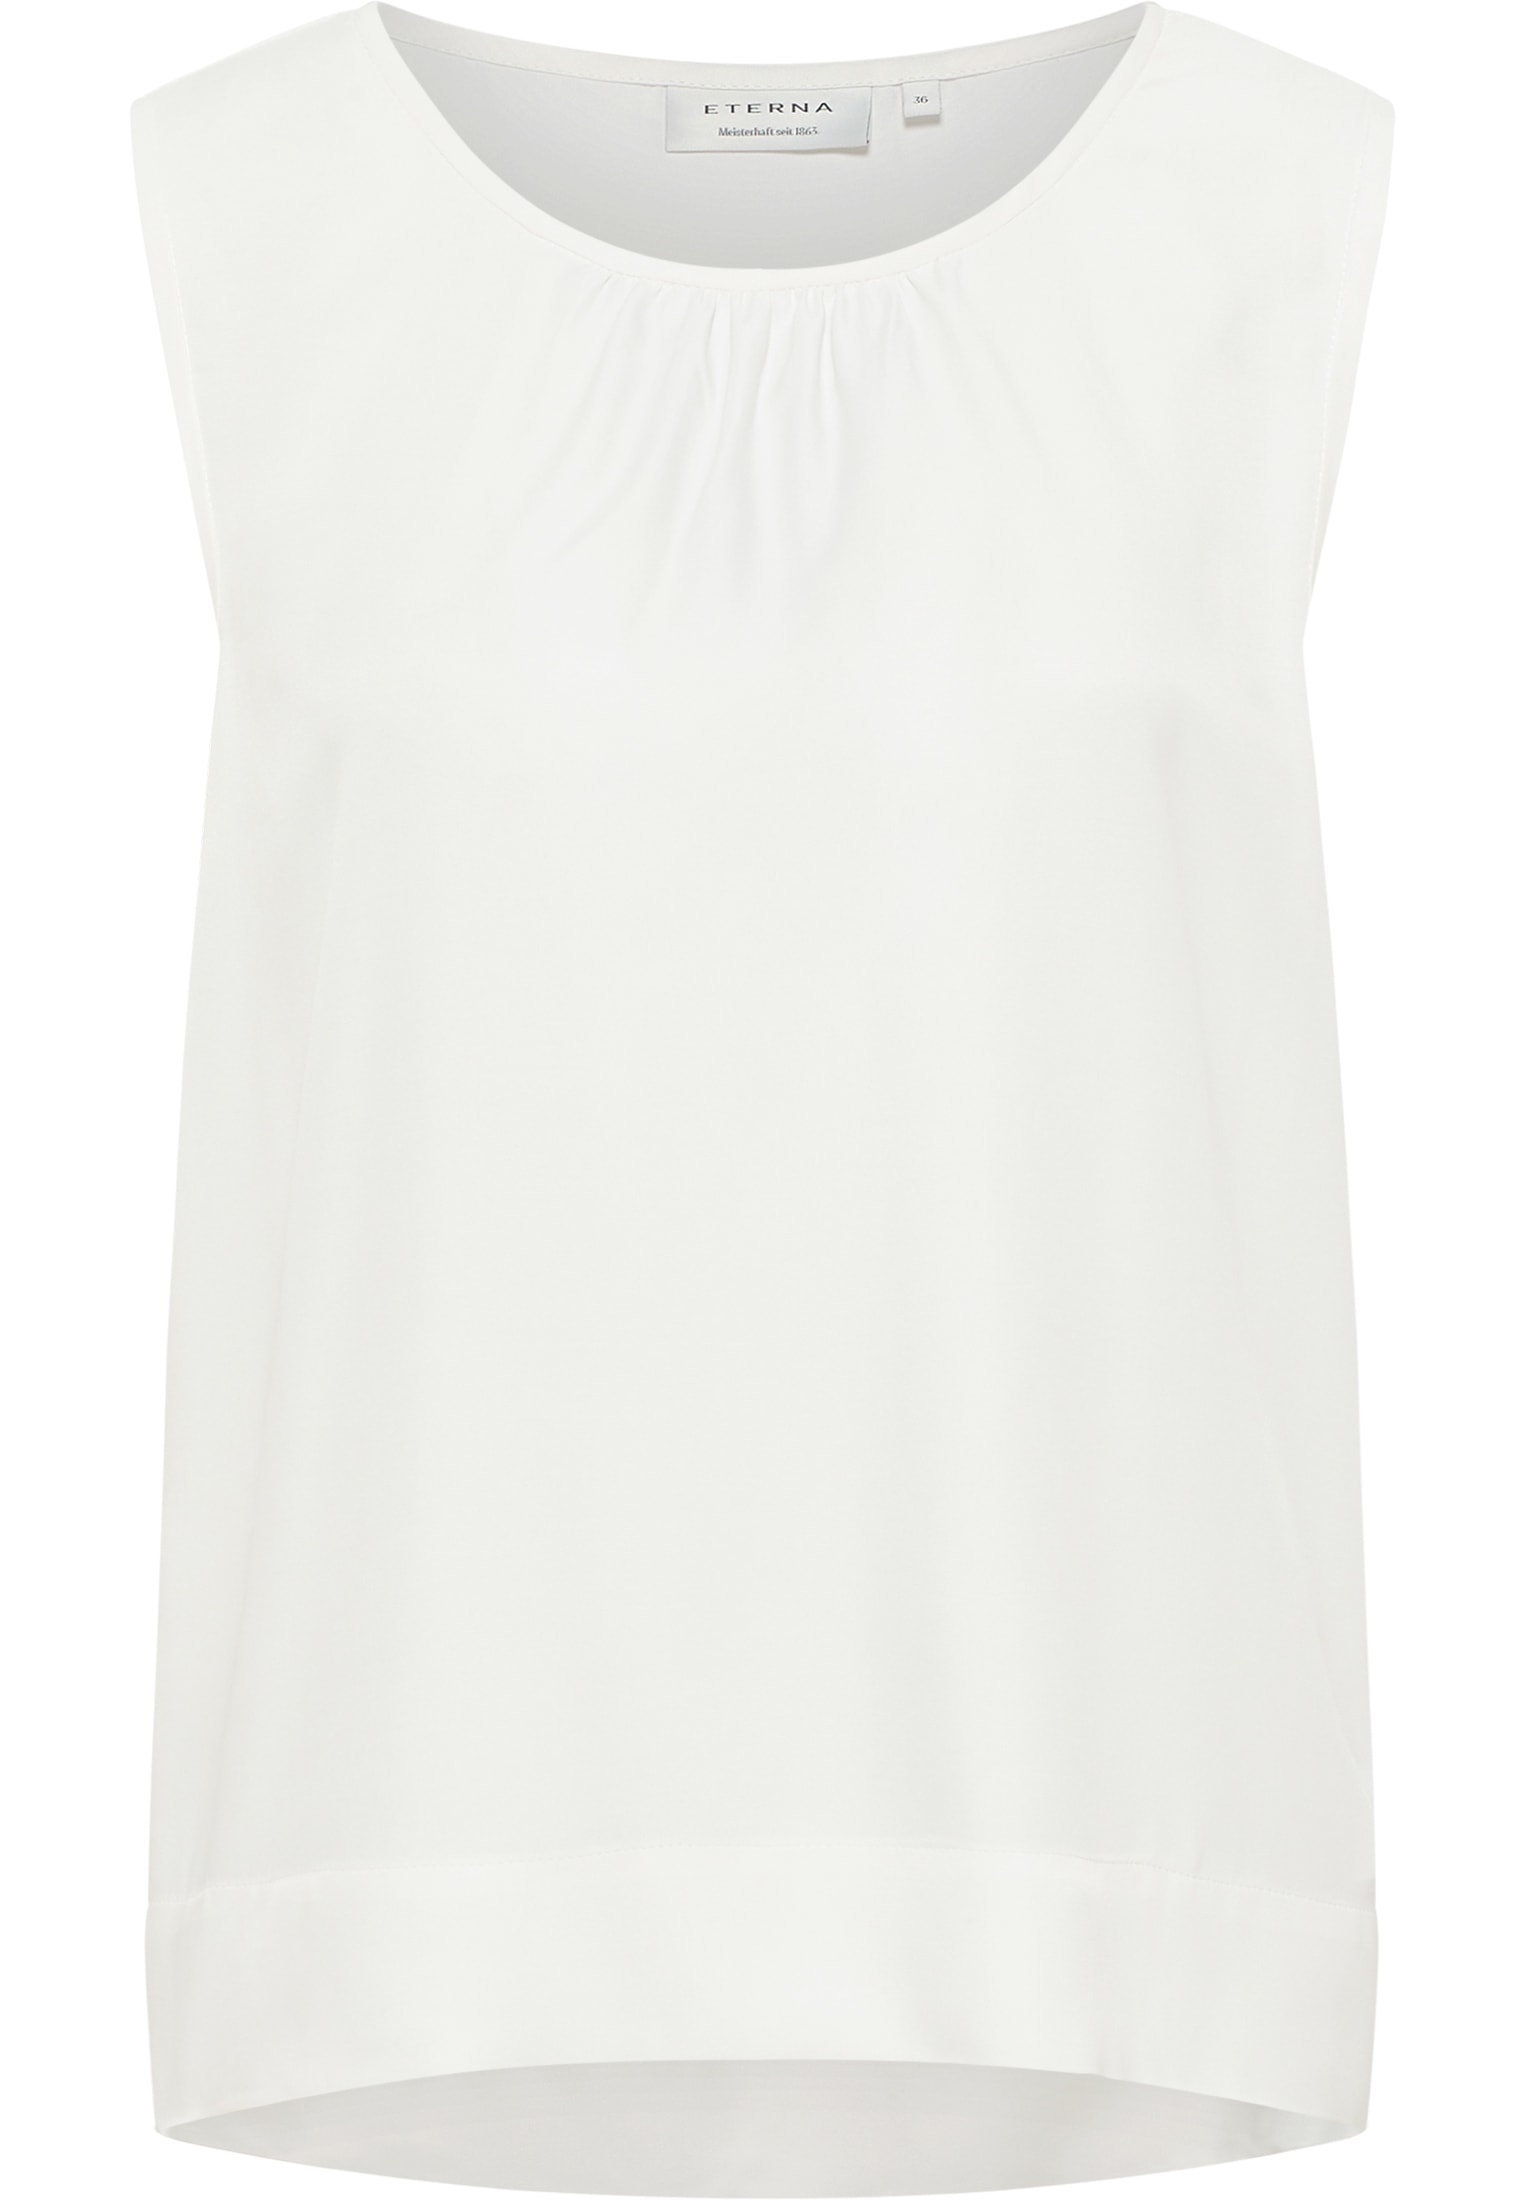 Viscose Shirt Bluse unifarben | ohne 36 Arm in | off-white | | 2BL04345-00-02-36-sl off-white